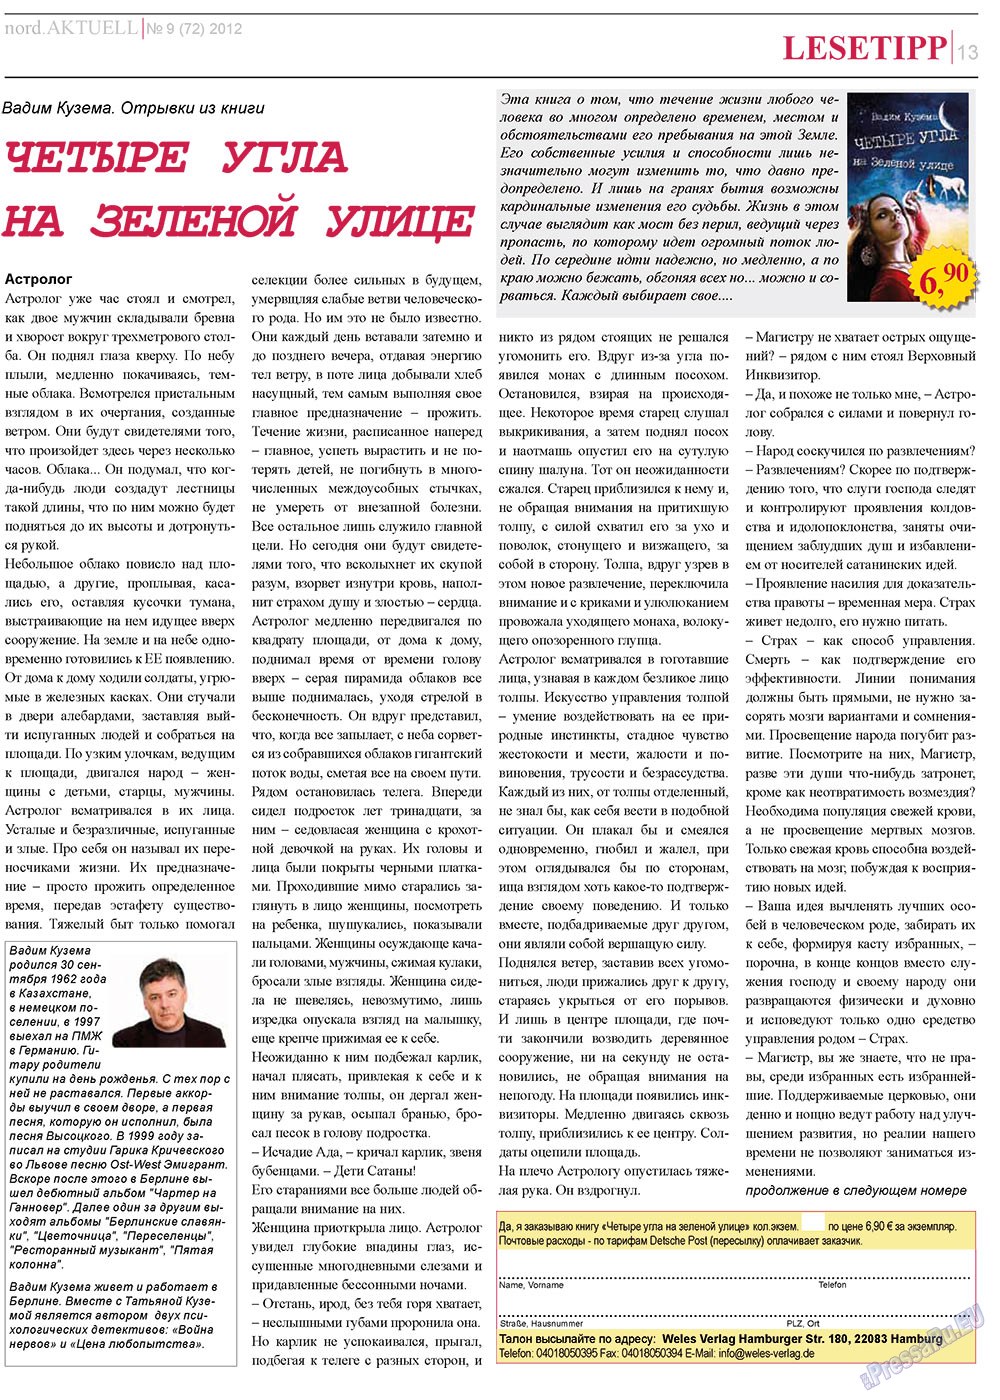 nord.Aktuell, газета. 2012 №9 стр.13